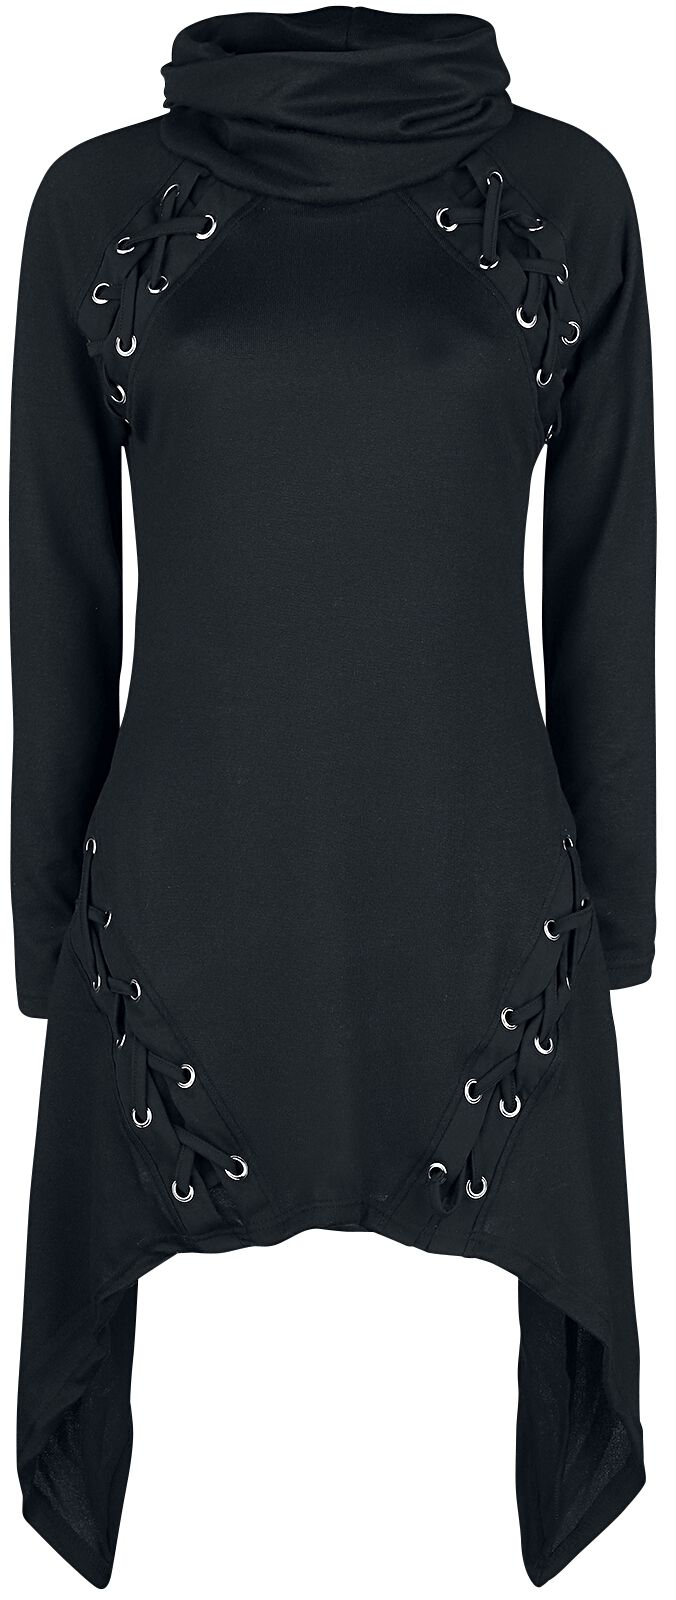 Poizen Industries Hazard Dress Medium-length dress black